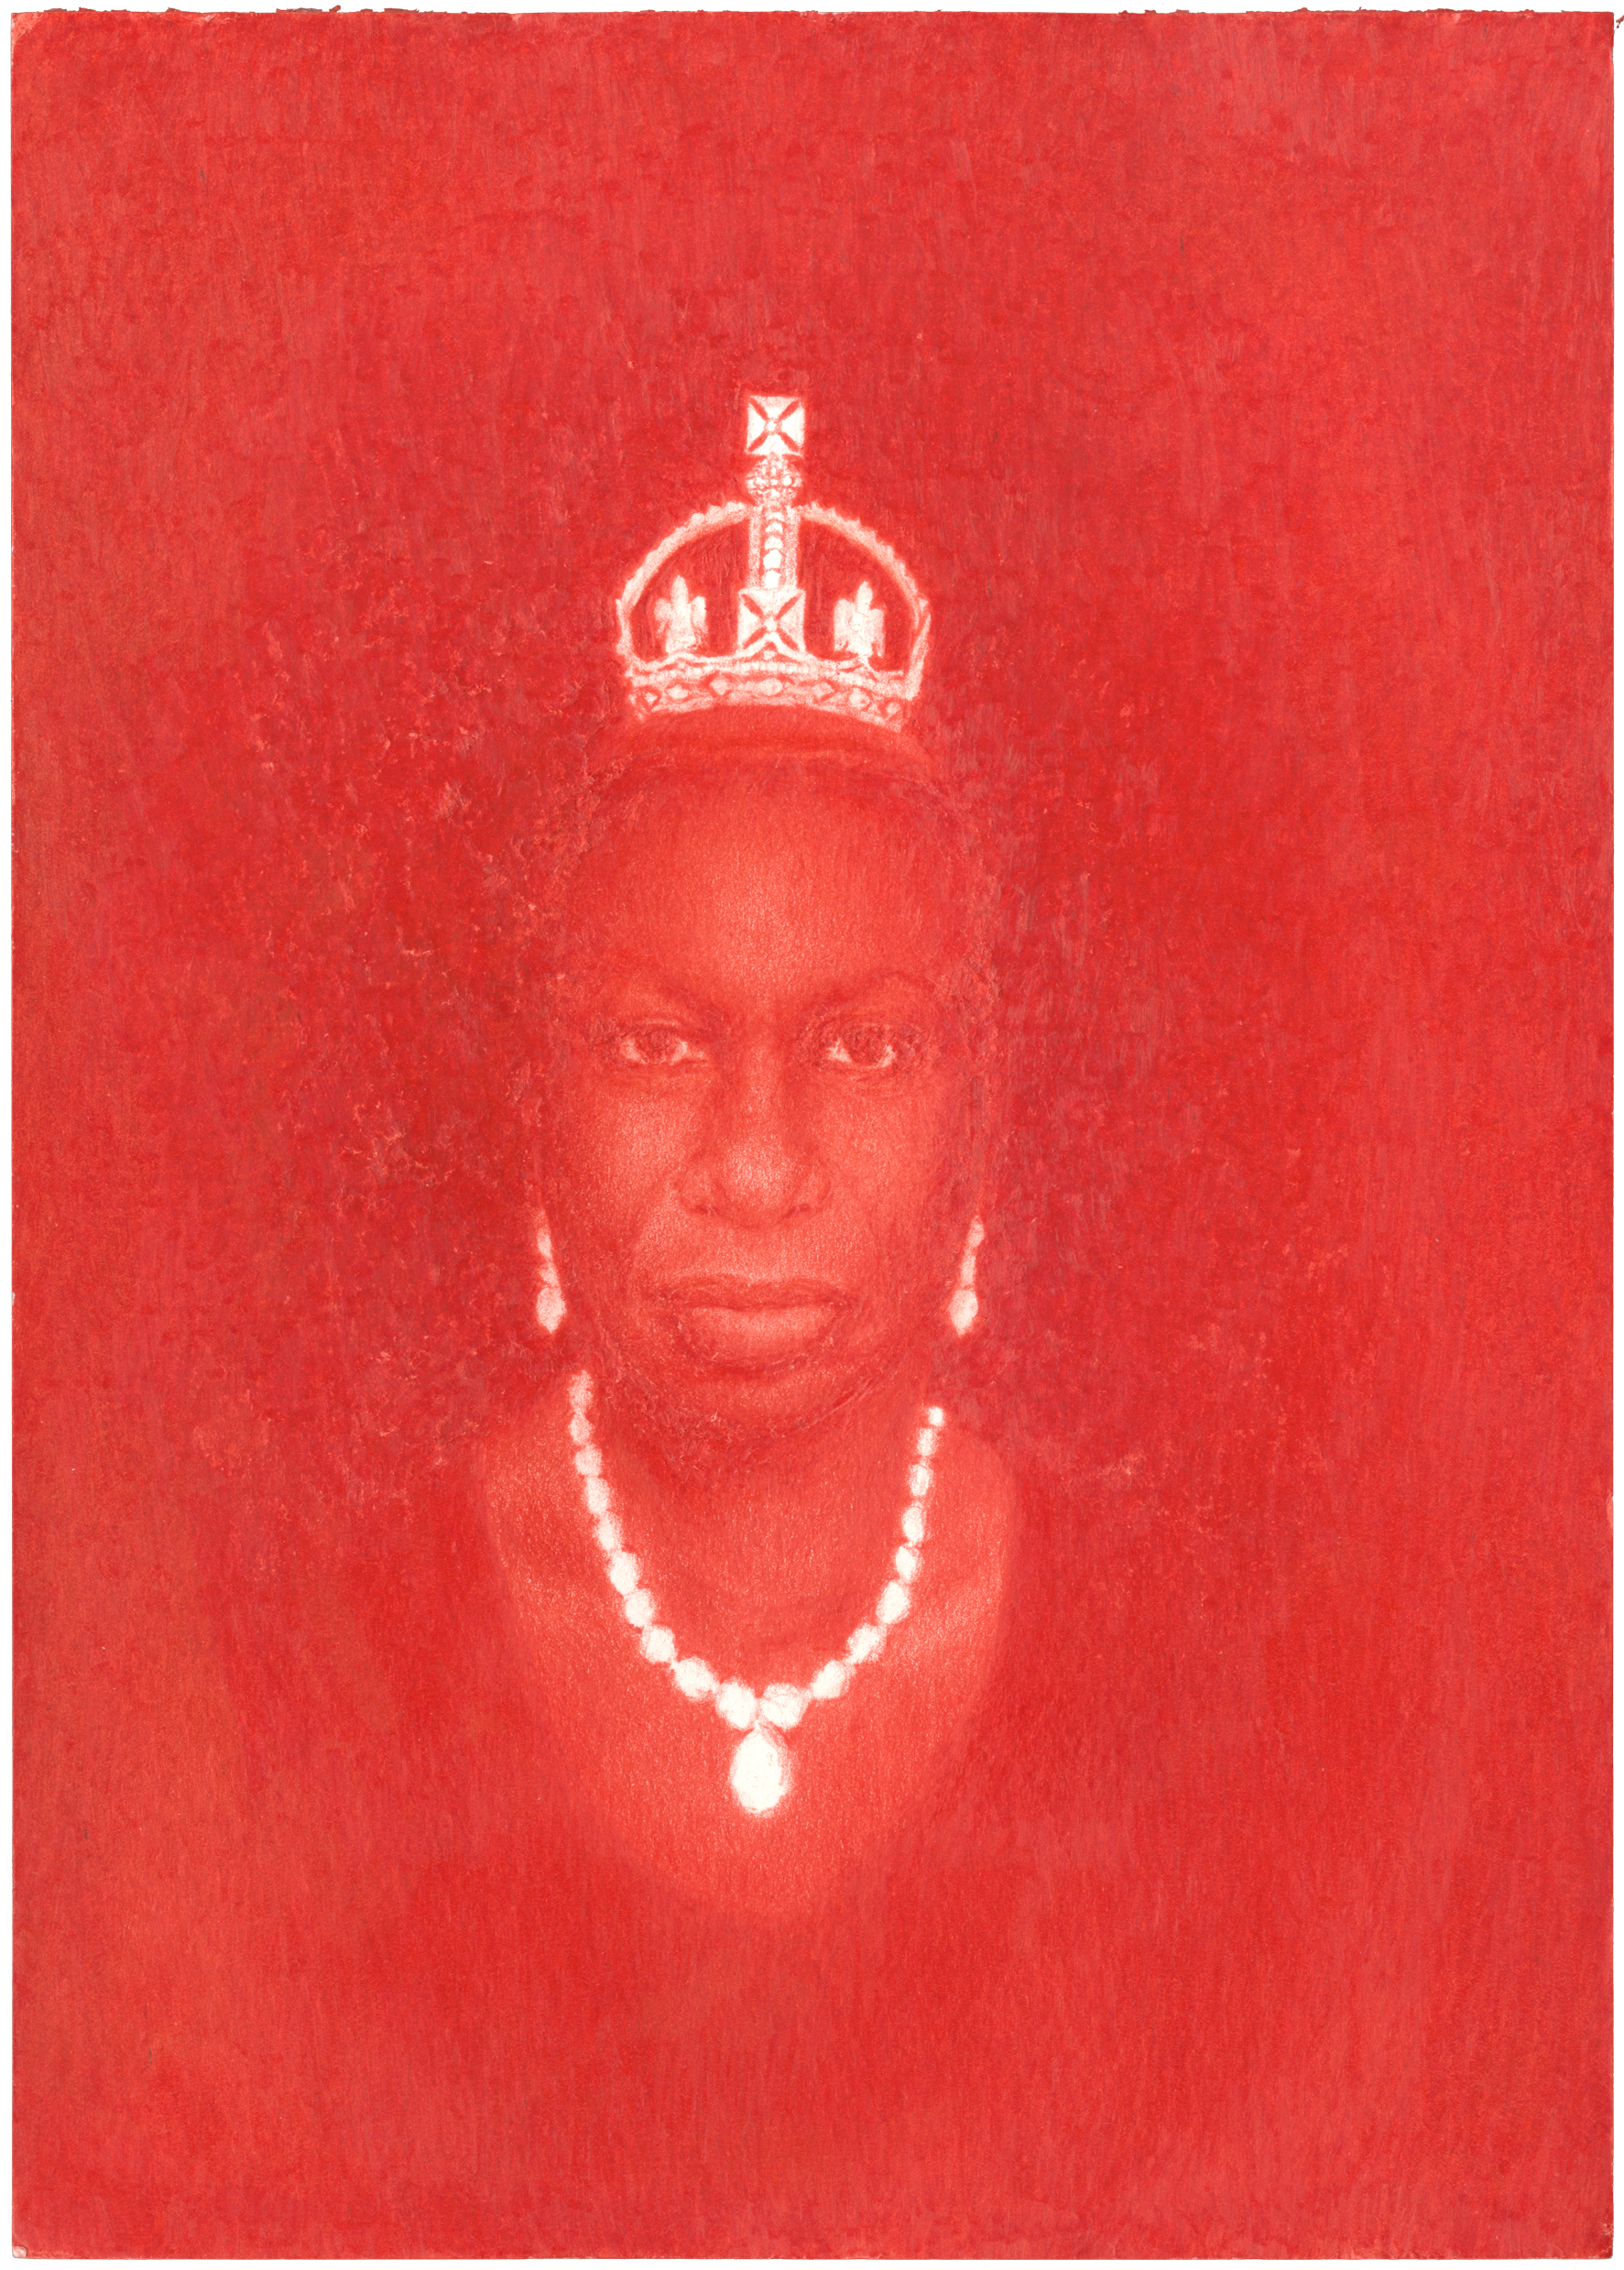 Pedro A.H. Paixão, Petite Couronne de Diamant (Nina Simone in memoriam), 2015, crayons de couleur sur papier, 20,9 x 14,8 cm, courtesy galeria 111